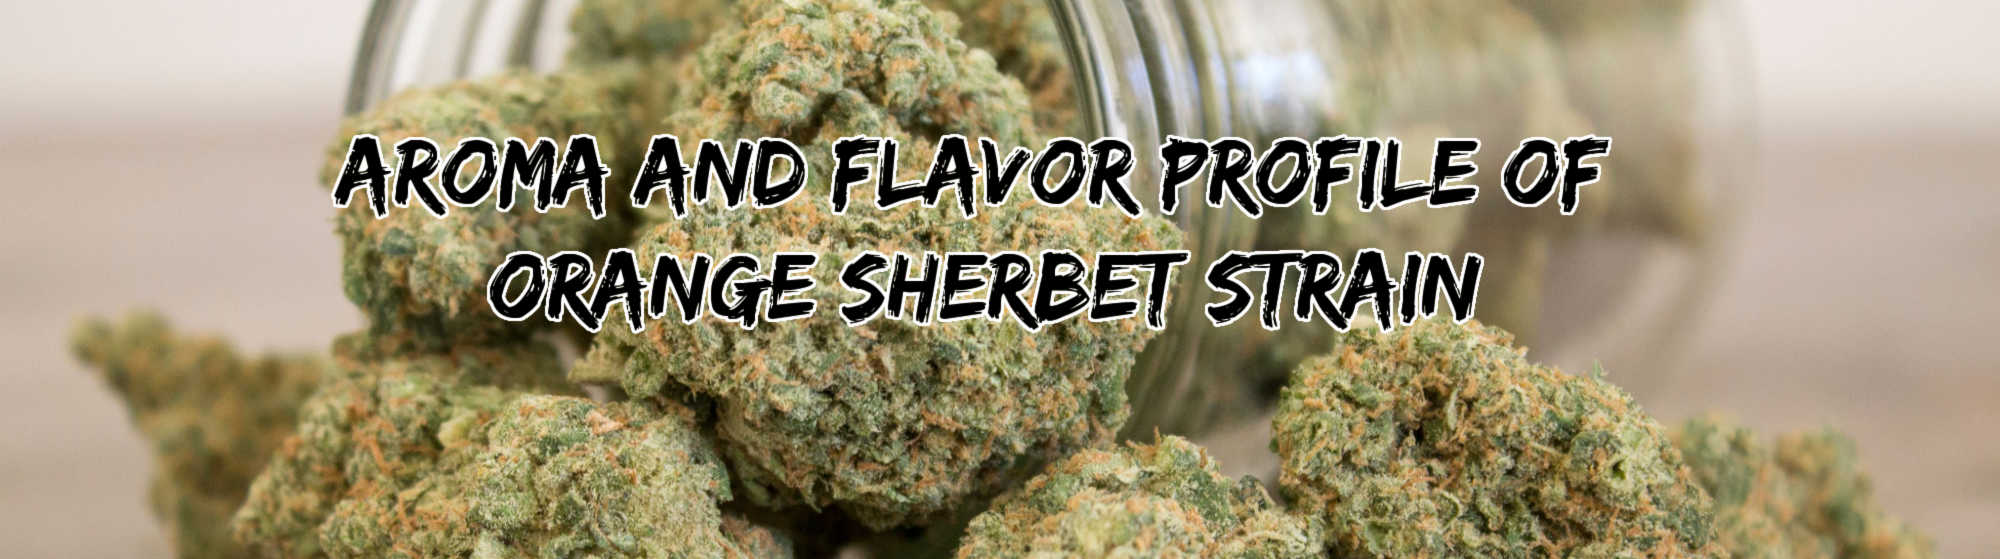 image of aroma and flavor profile of orange sherbet strain